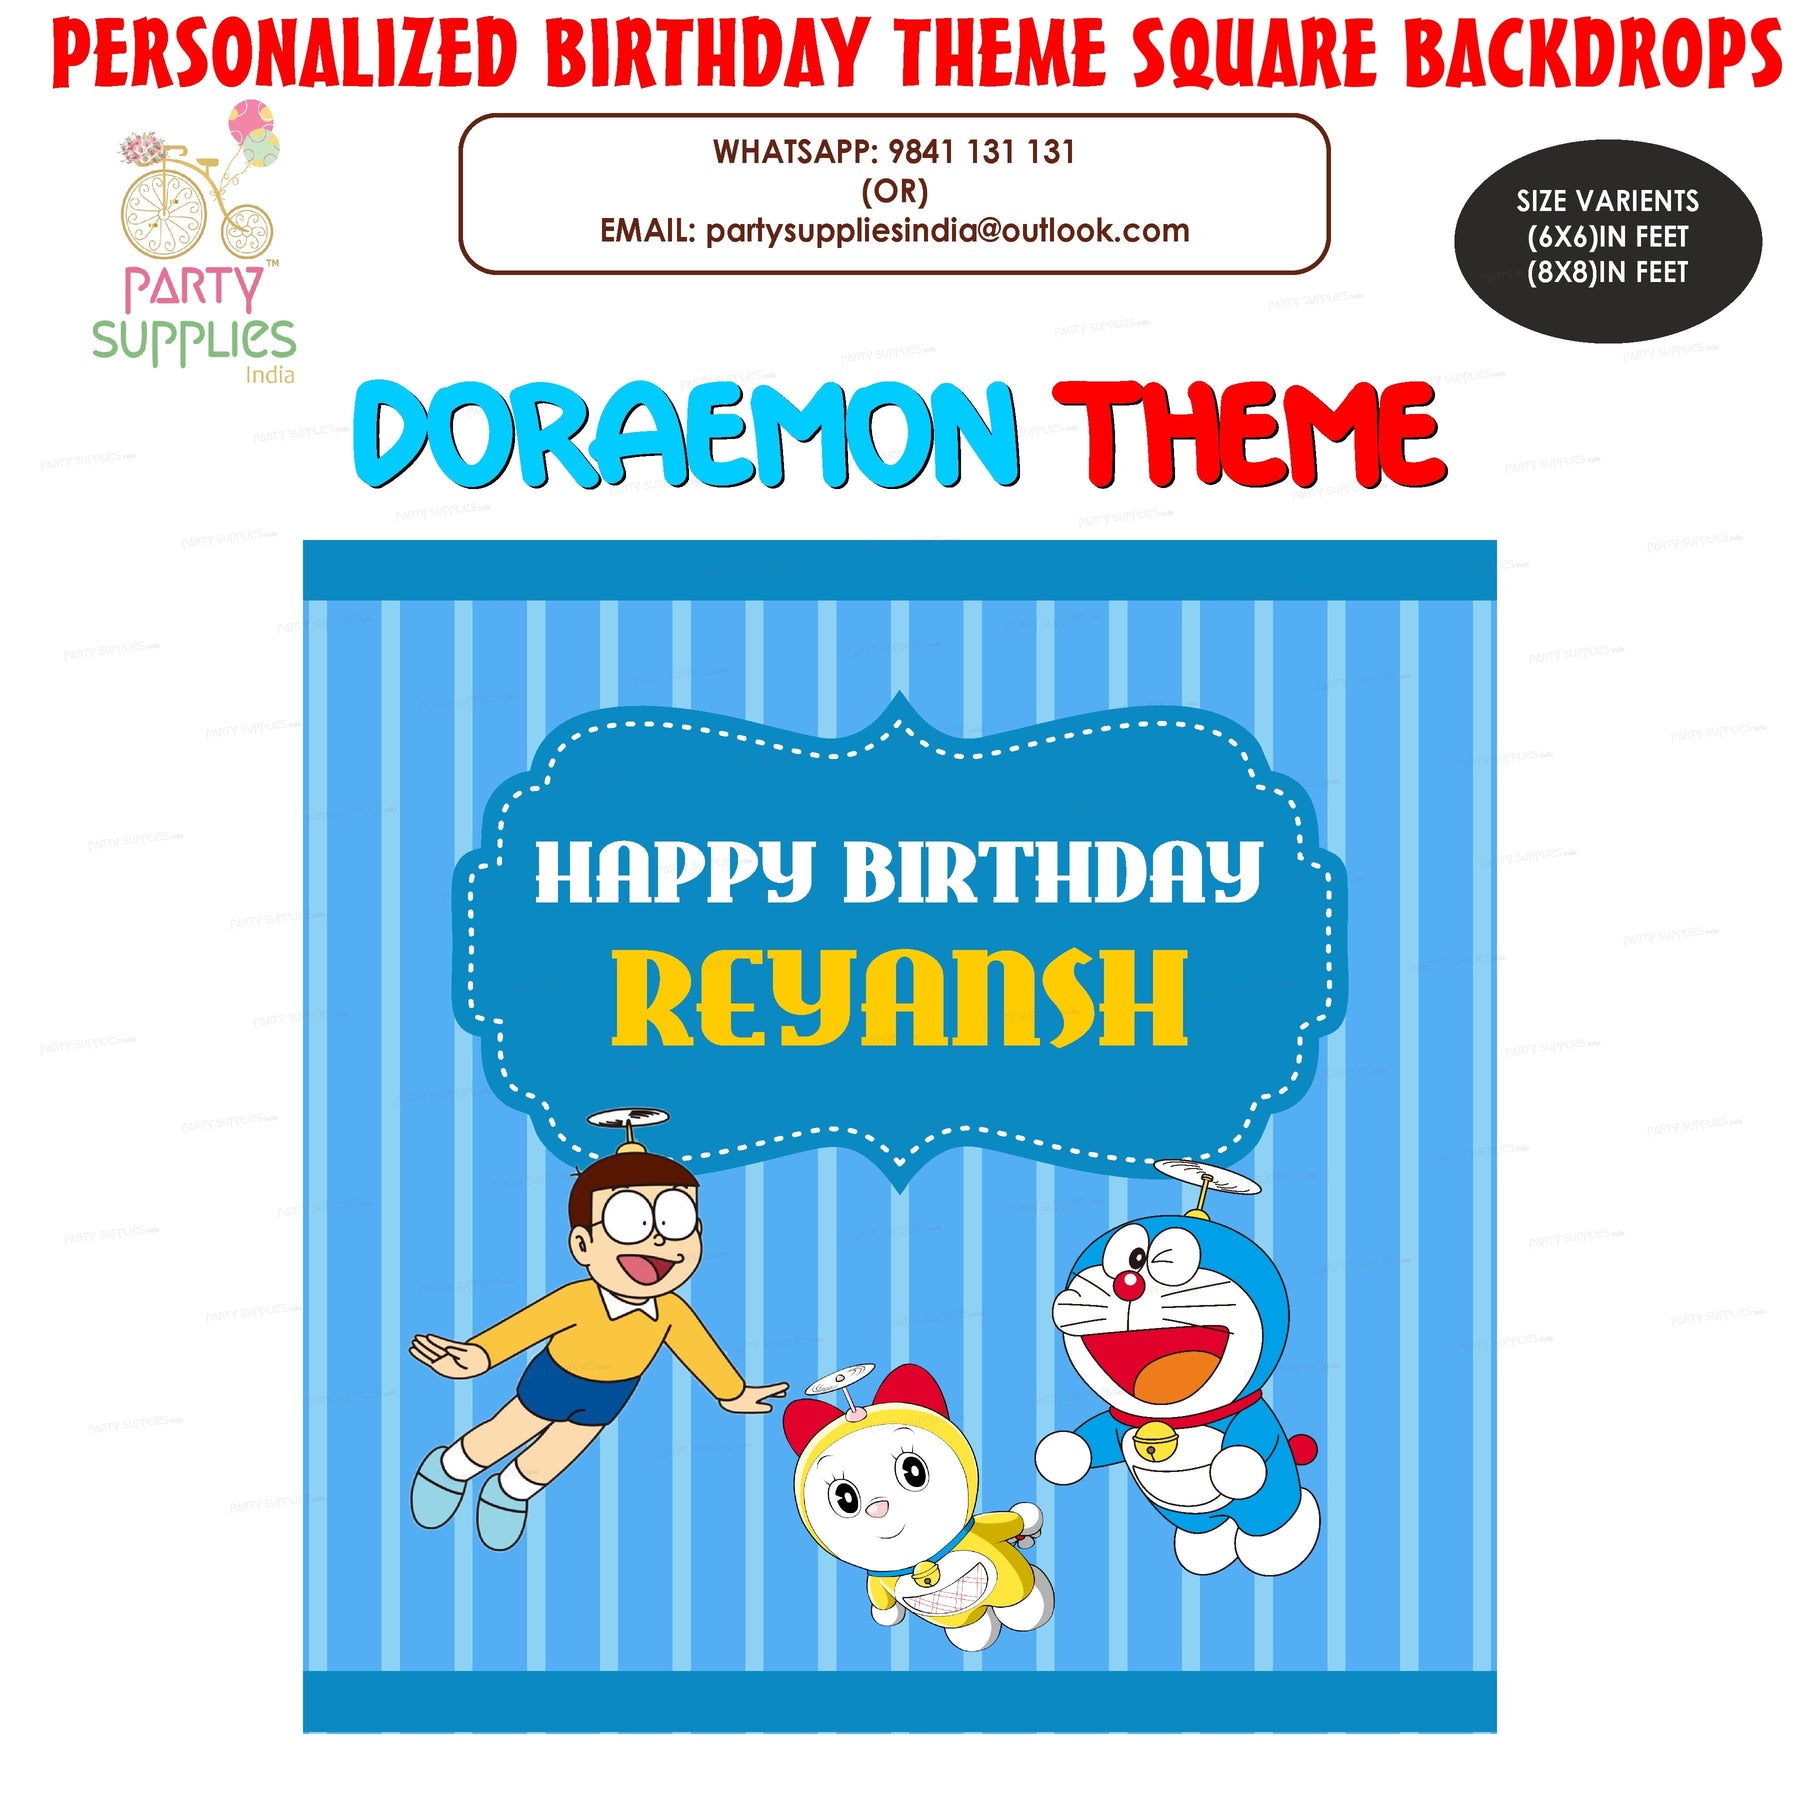 PSI Doraemon Theme Customized Square Backdrop